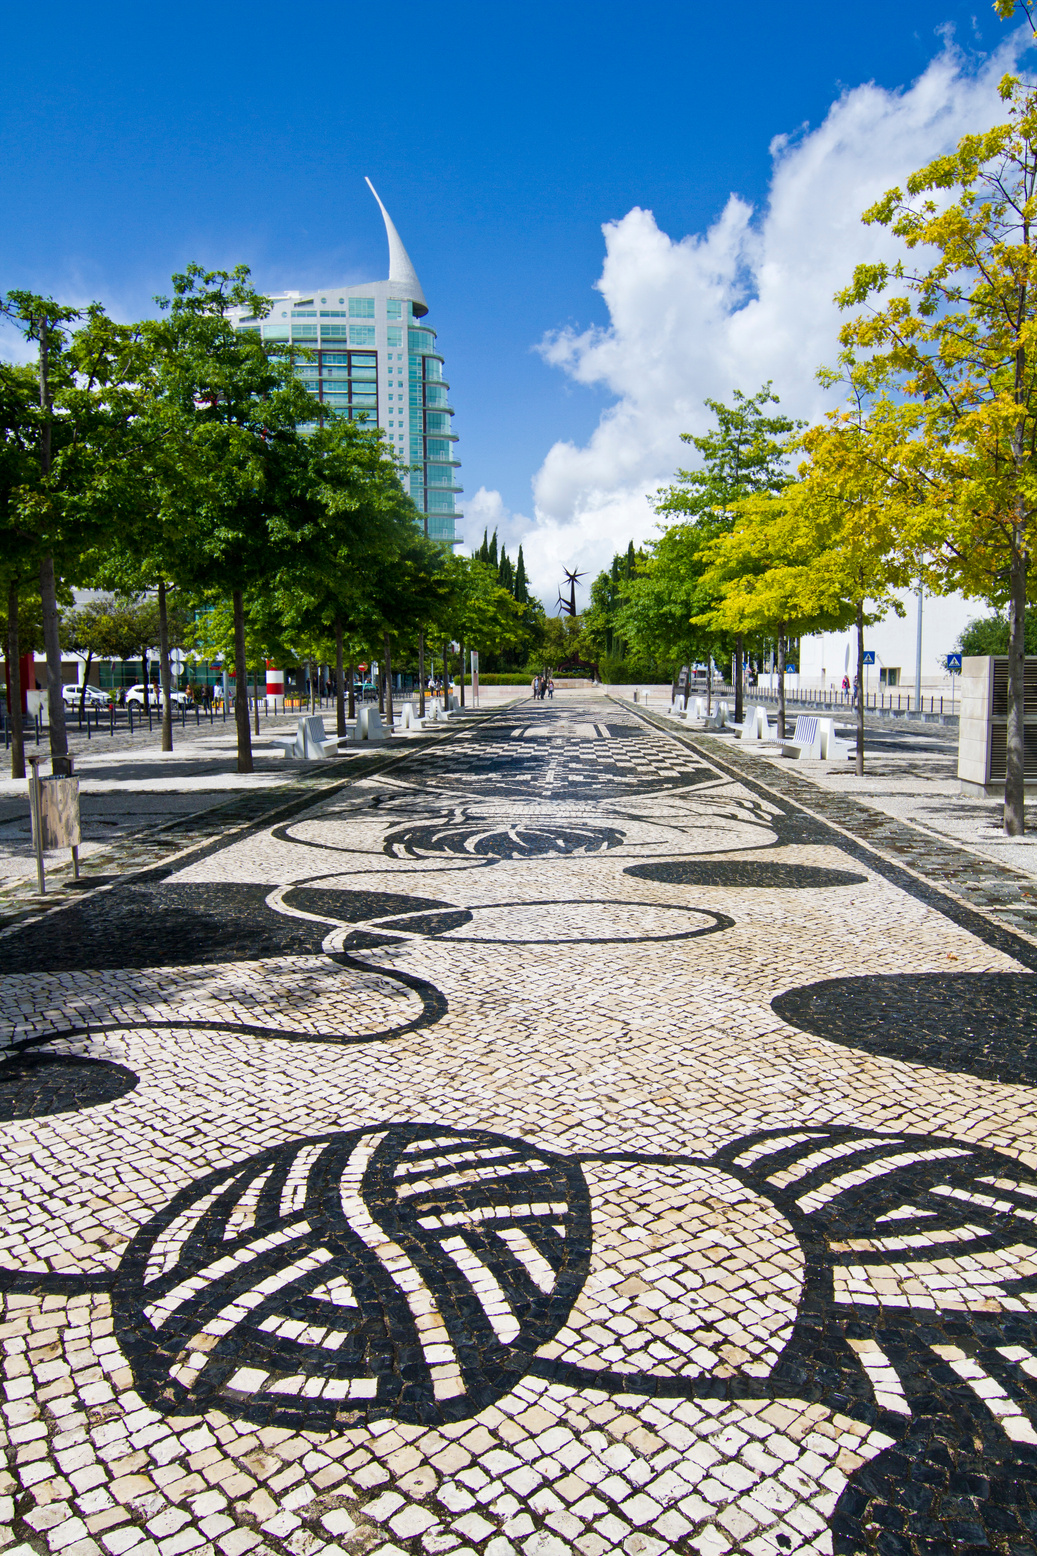 urban park area of Parque das Nacoes, Lisbon, Portugal